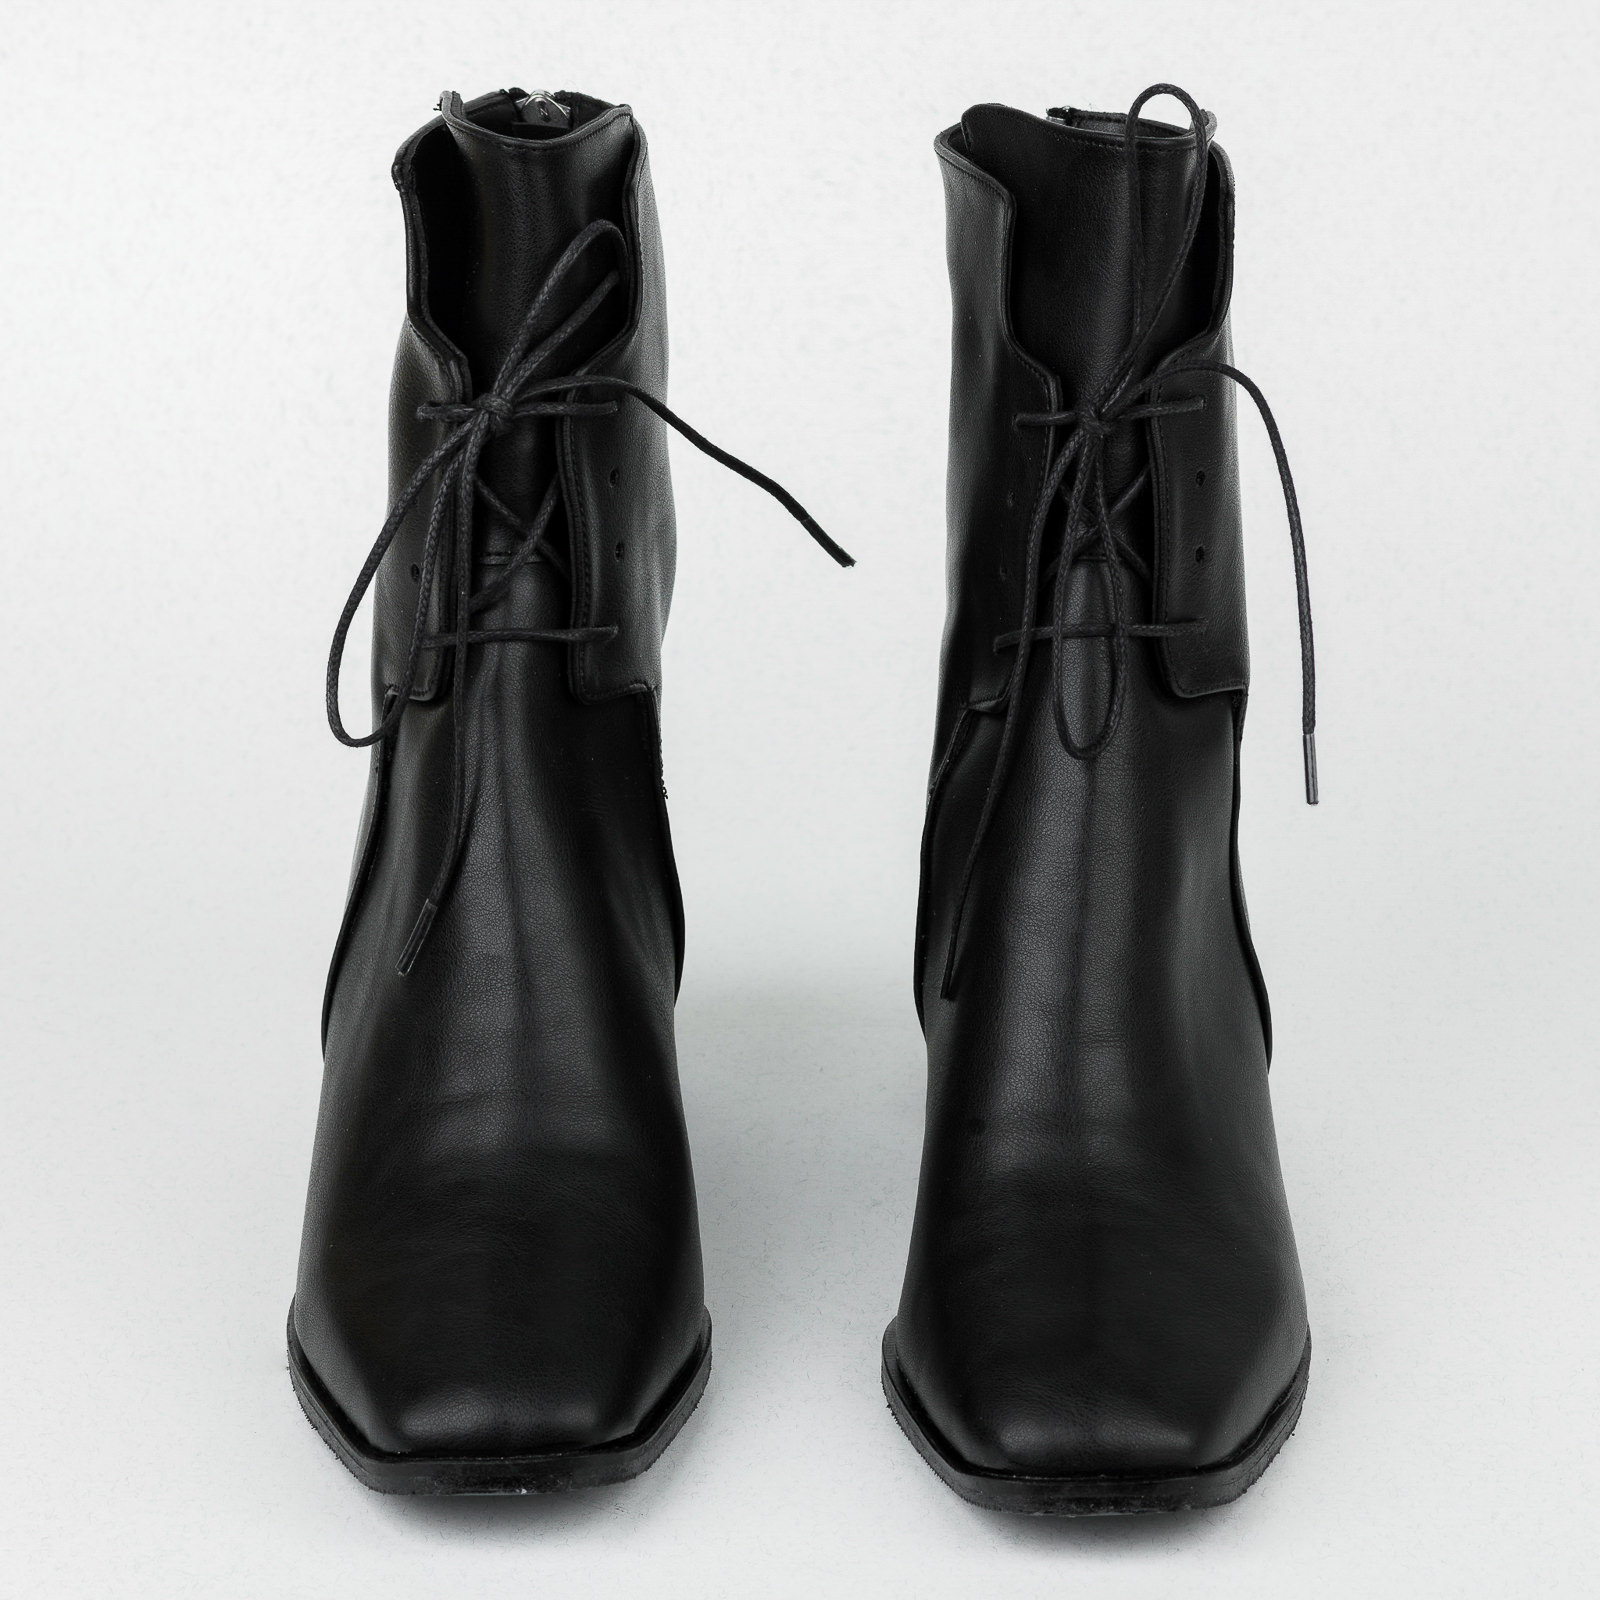 Women ankle boots B399 - BLACK